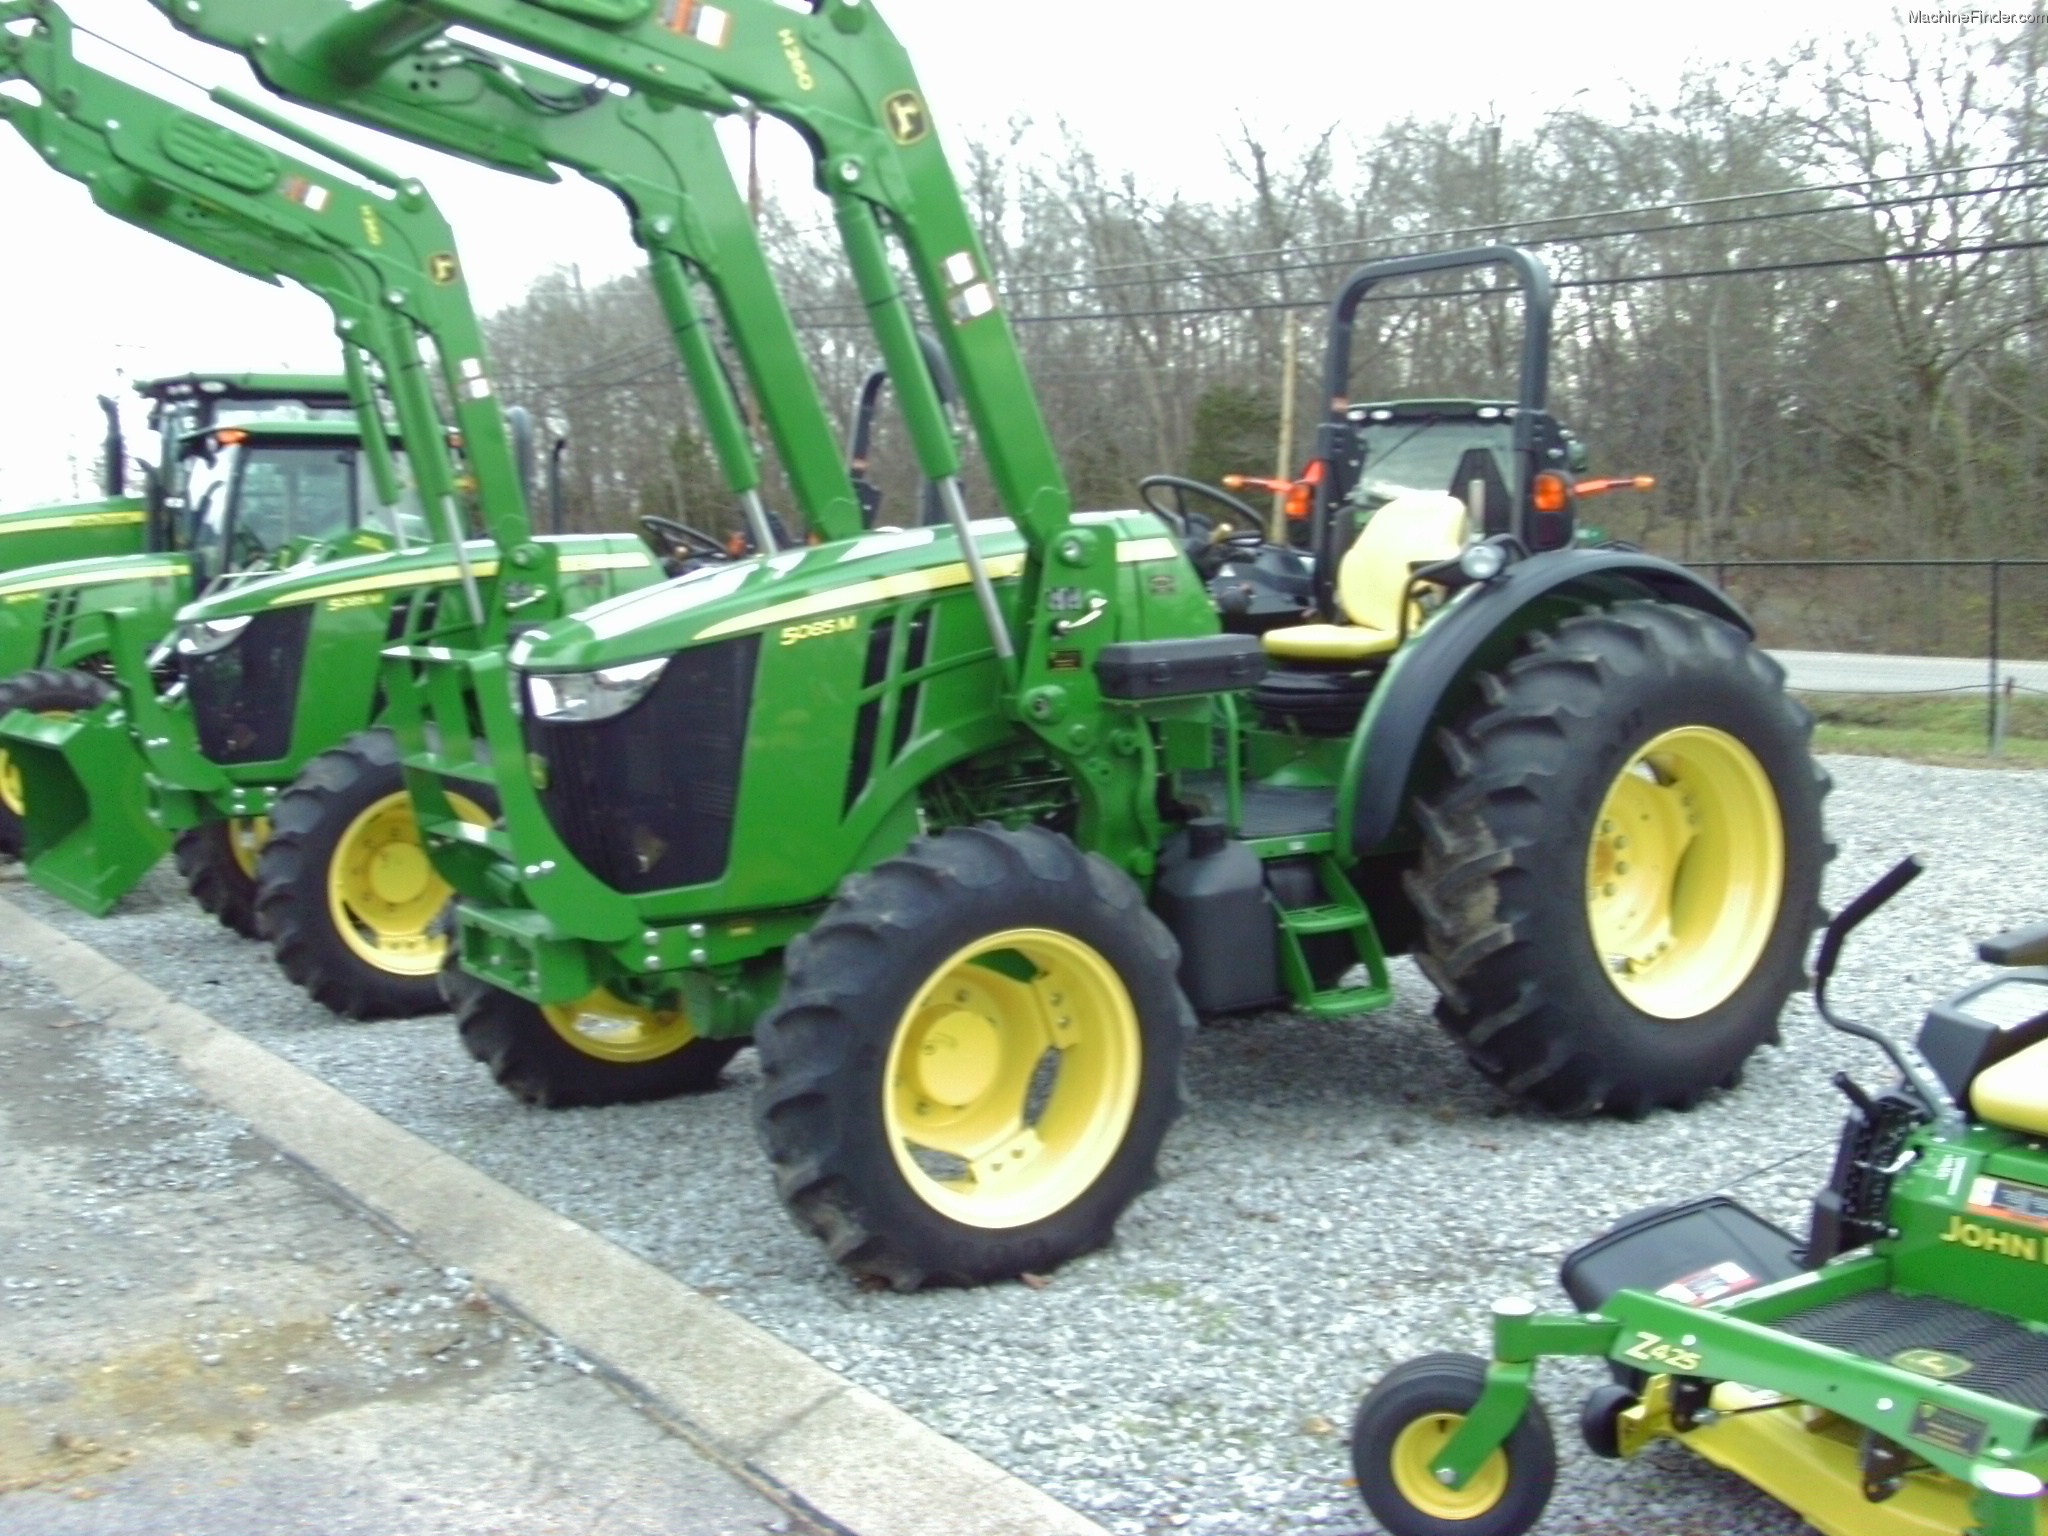 2014 John Deere 5085M Tractors - Utility (40-100hp) - John Deere ...